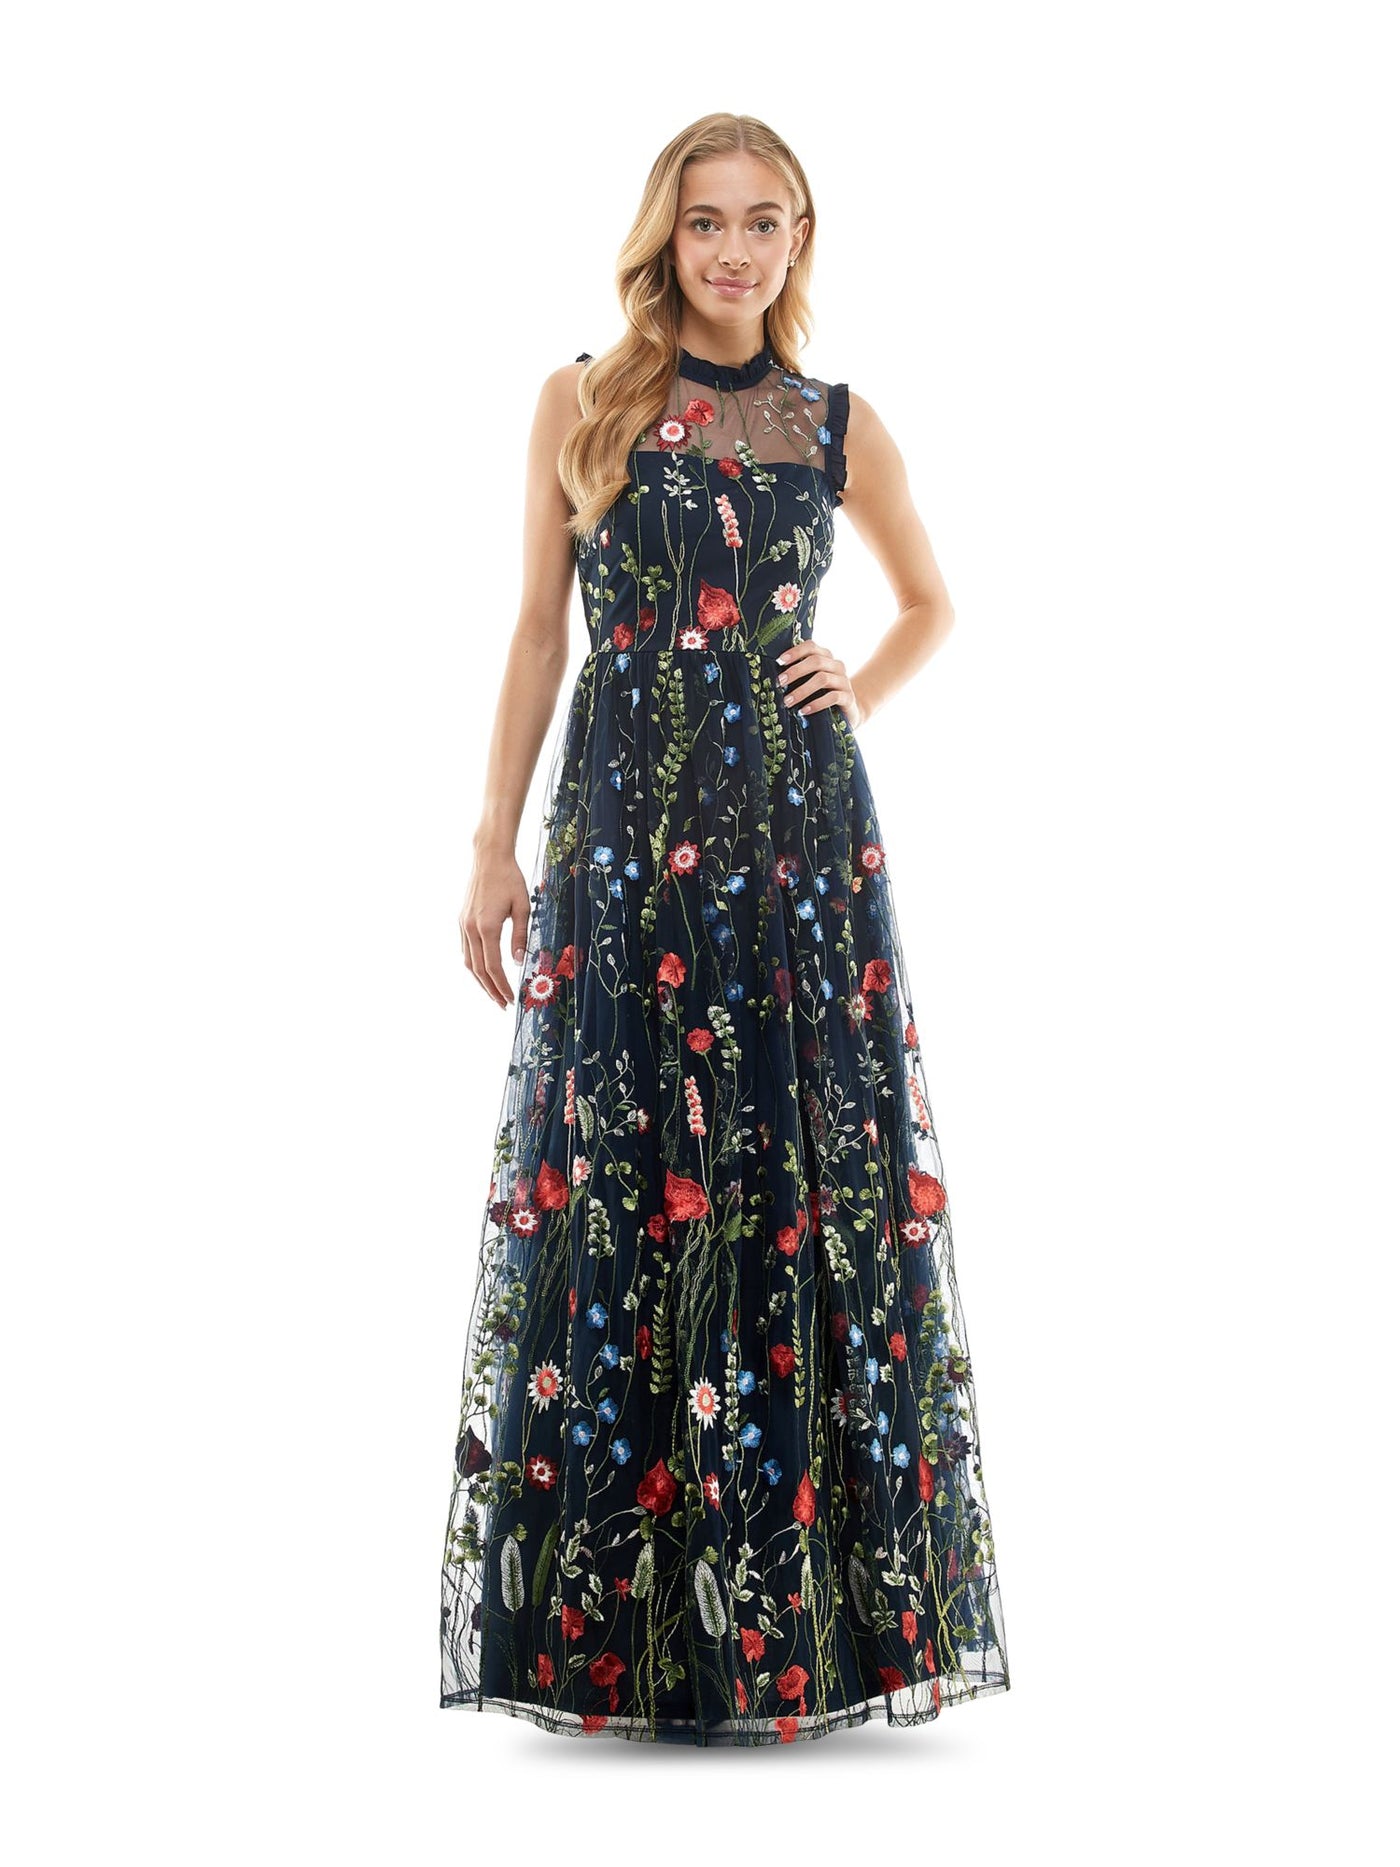 CITY STUDIO Womens Navy Embroidered Ruffled Trim Floral Sleeveless Illusion Neckline Full-Length Evening Dress Juniors 7